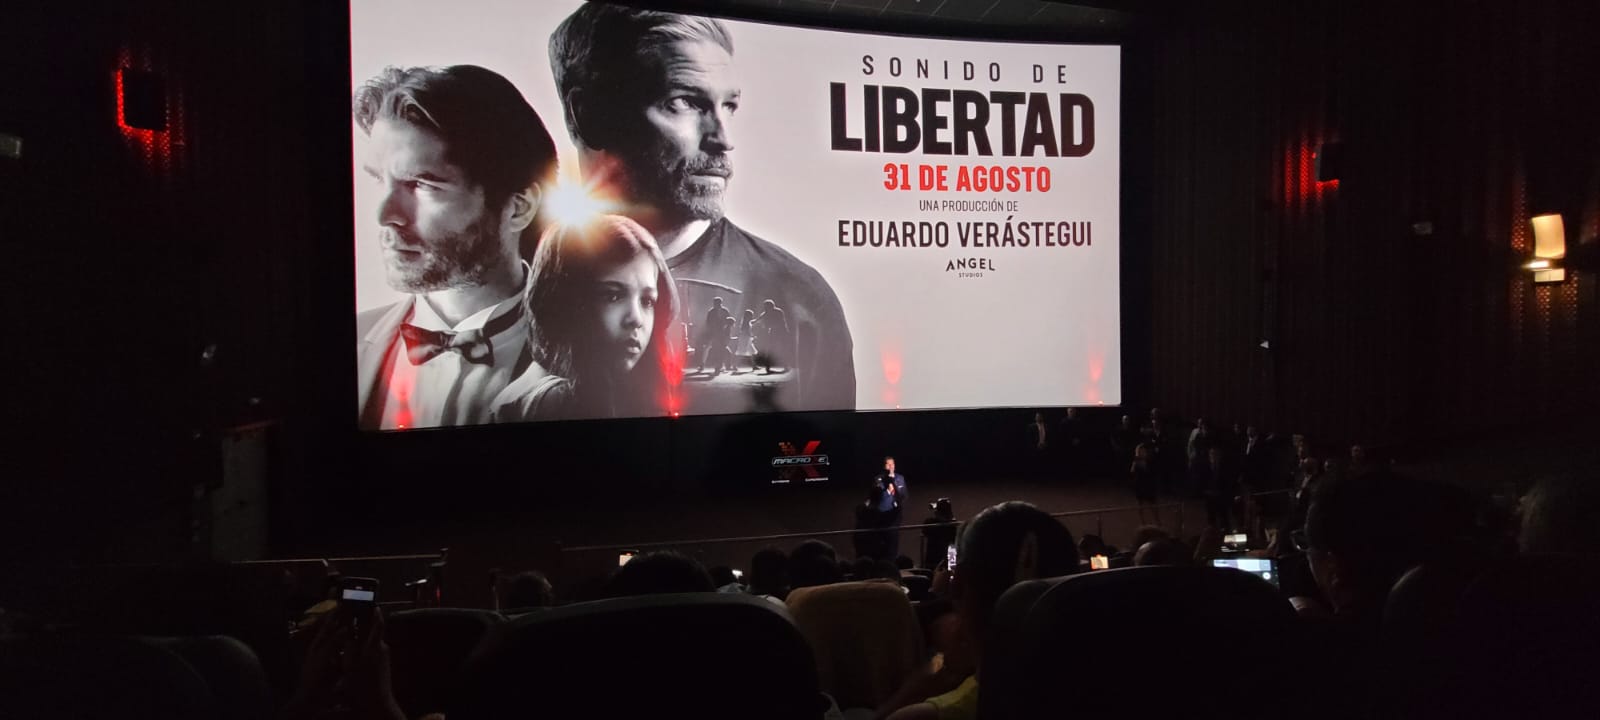 Costa Rica│Película “Sonido de Libertad” mueve diputados a actuar